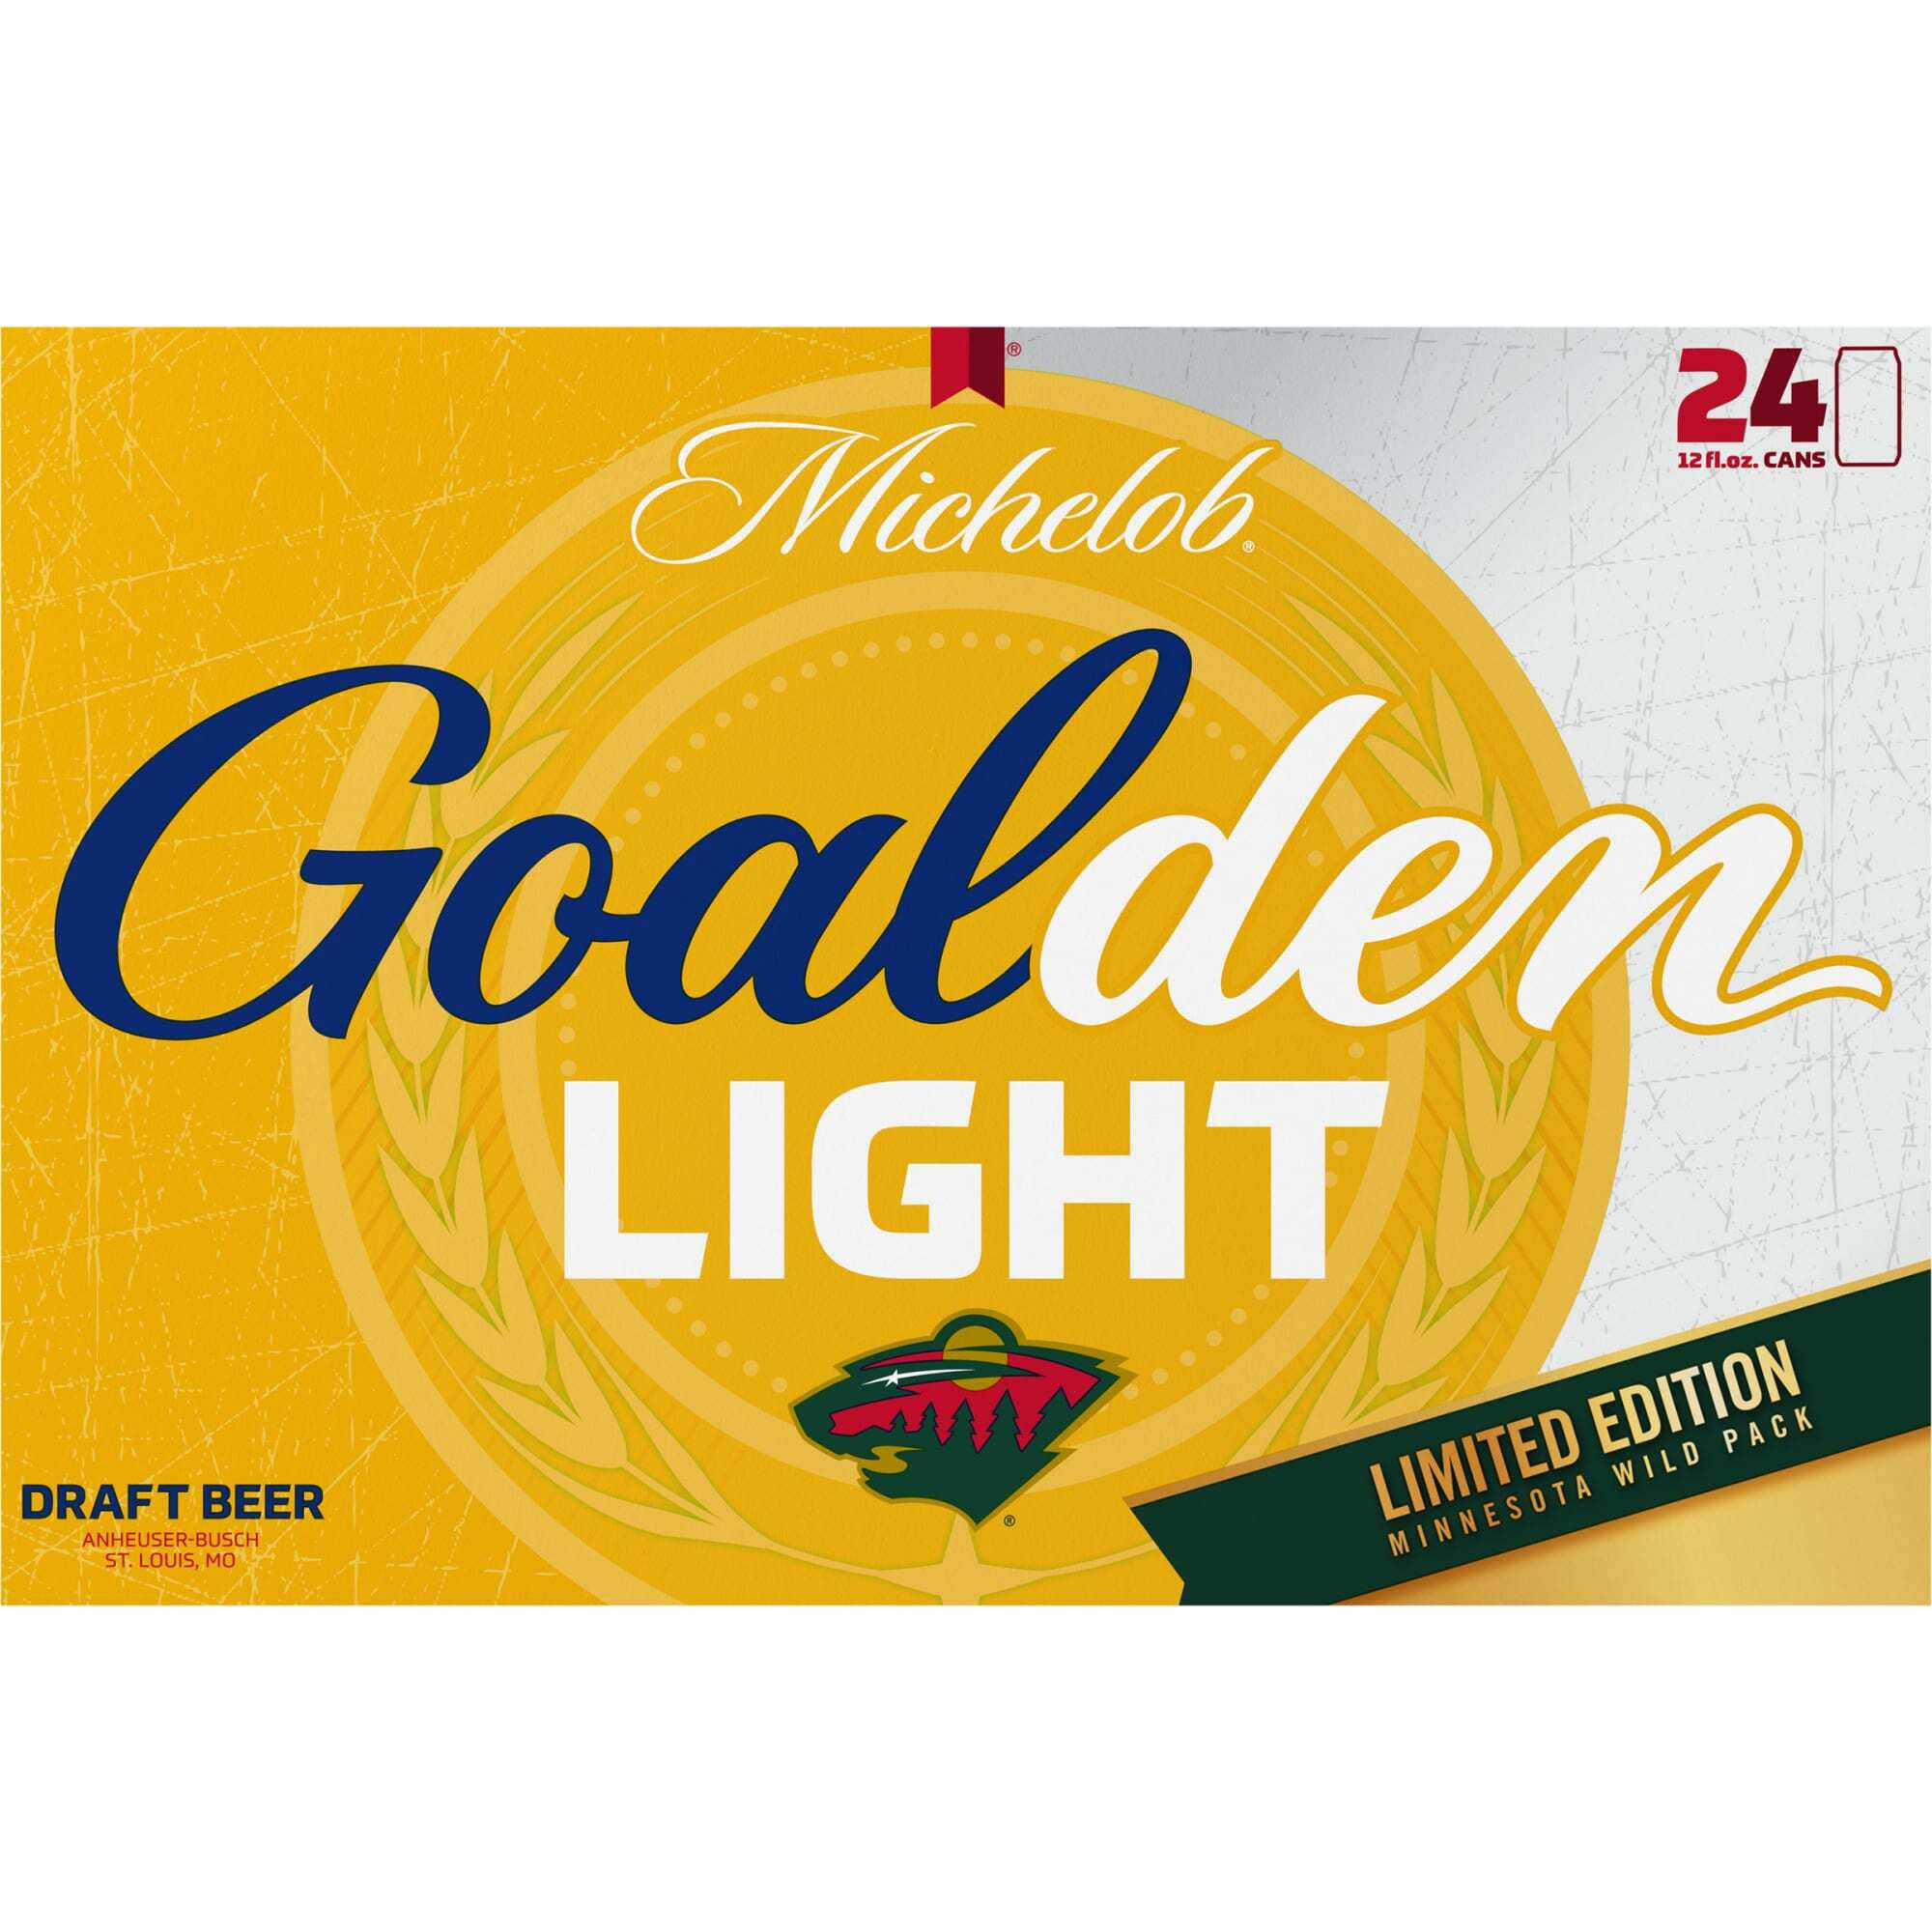 Michelob Golden Light Draft Beer - 12 fl oz, 24 pack